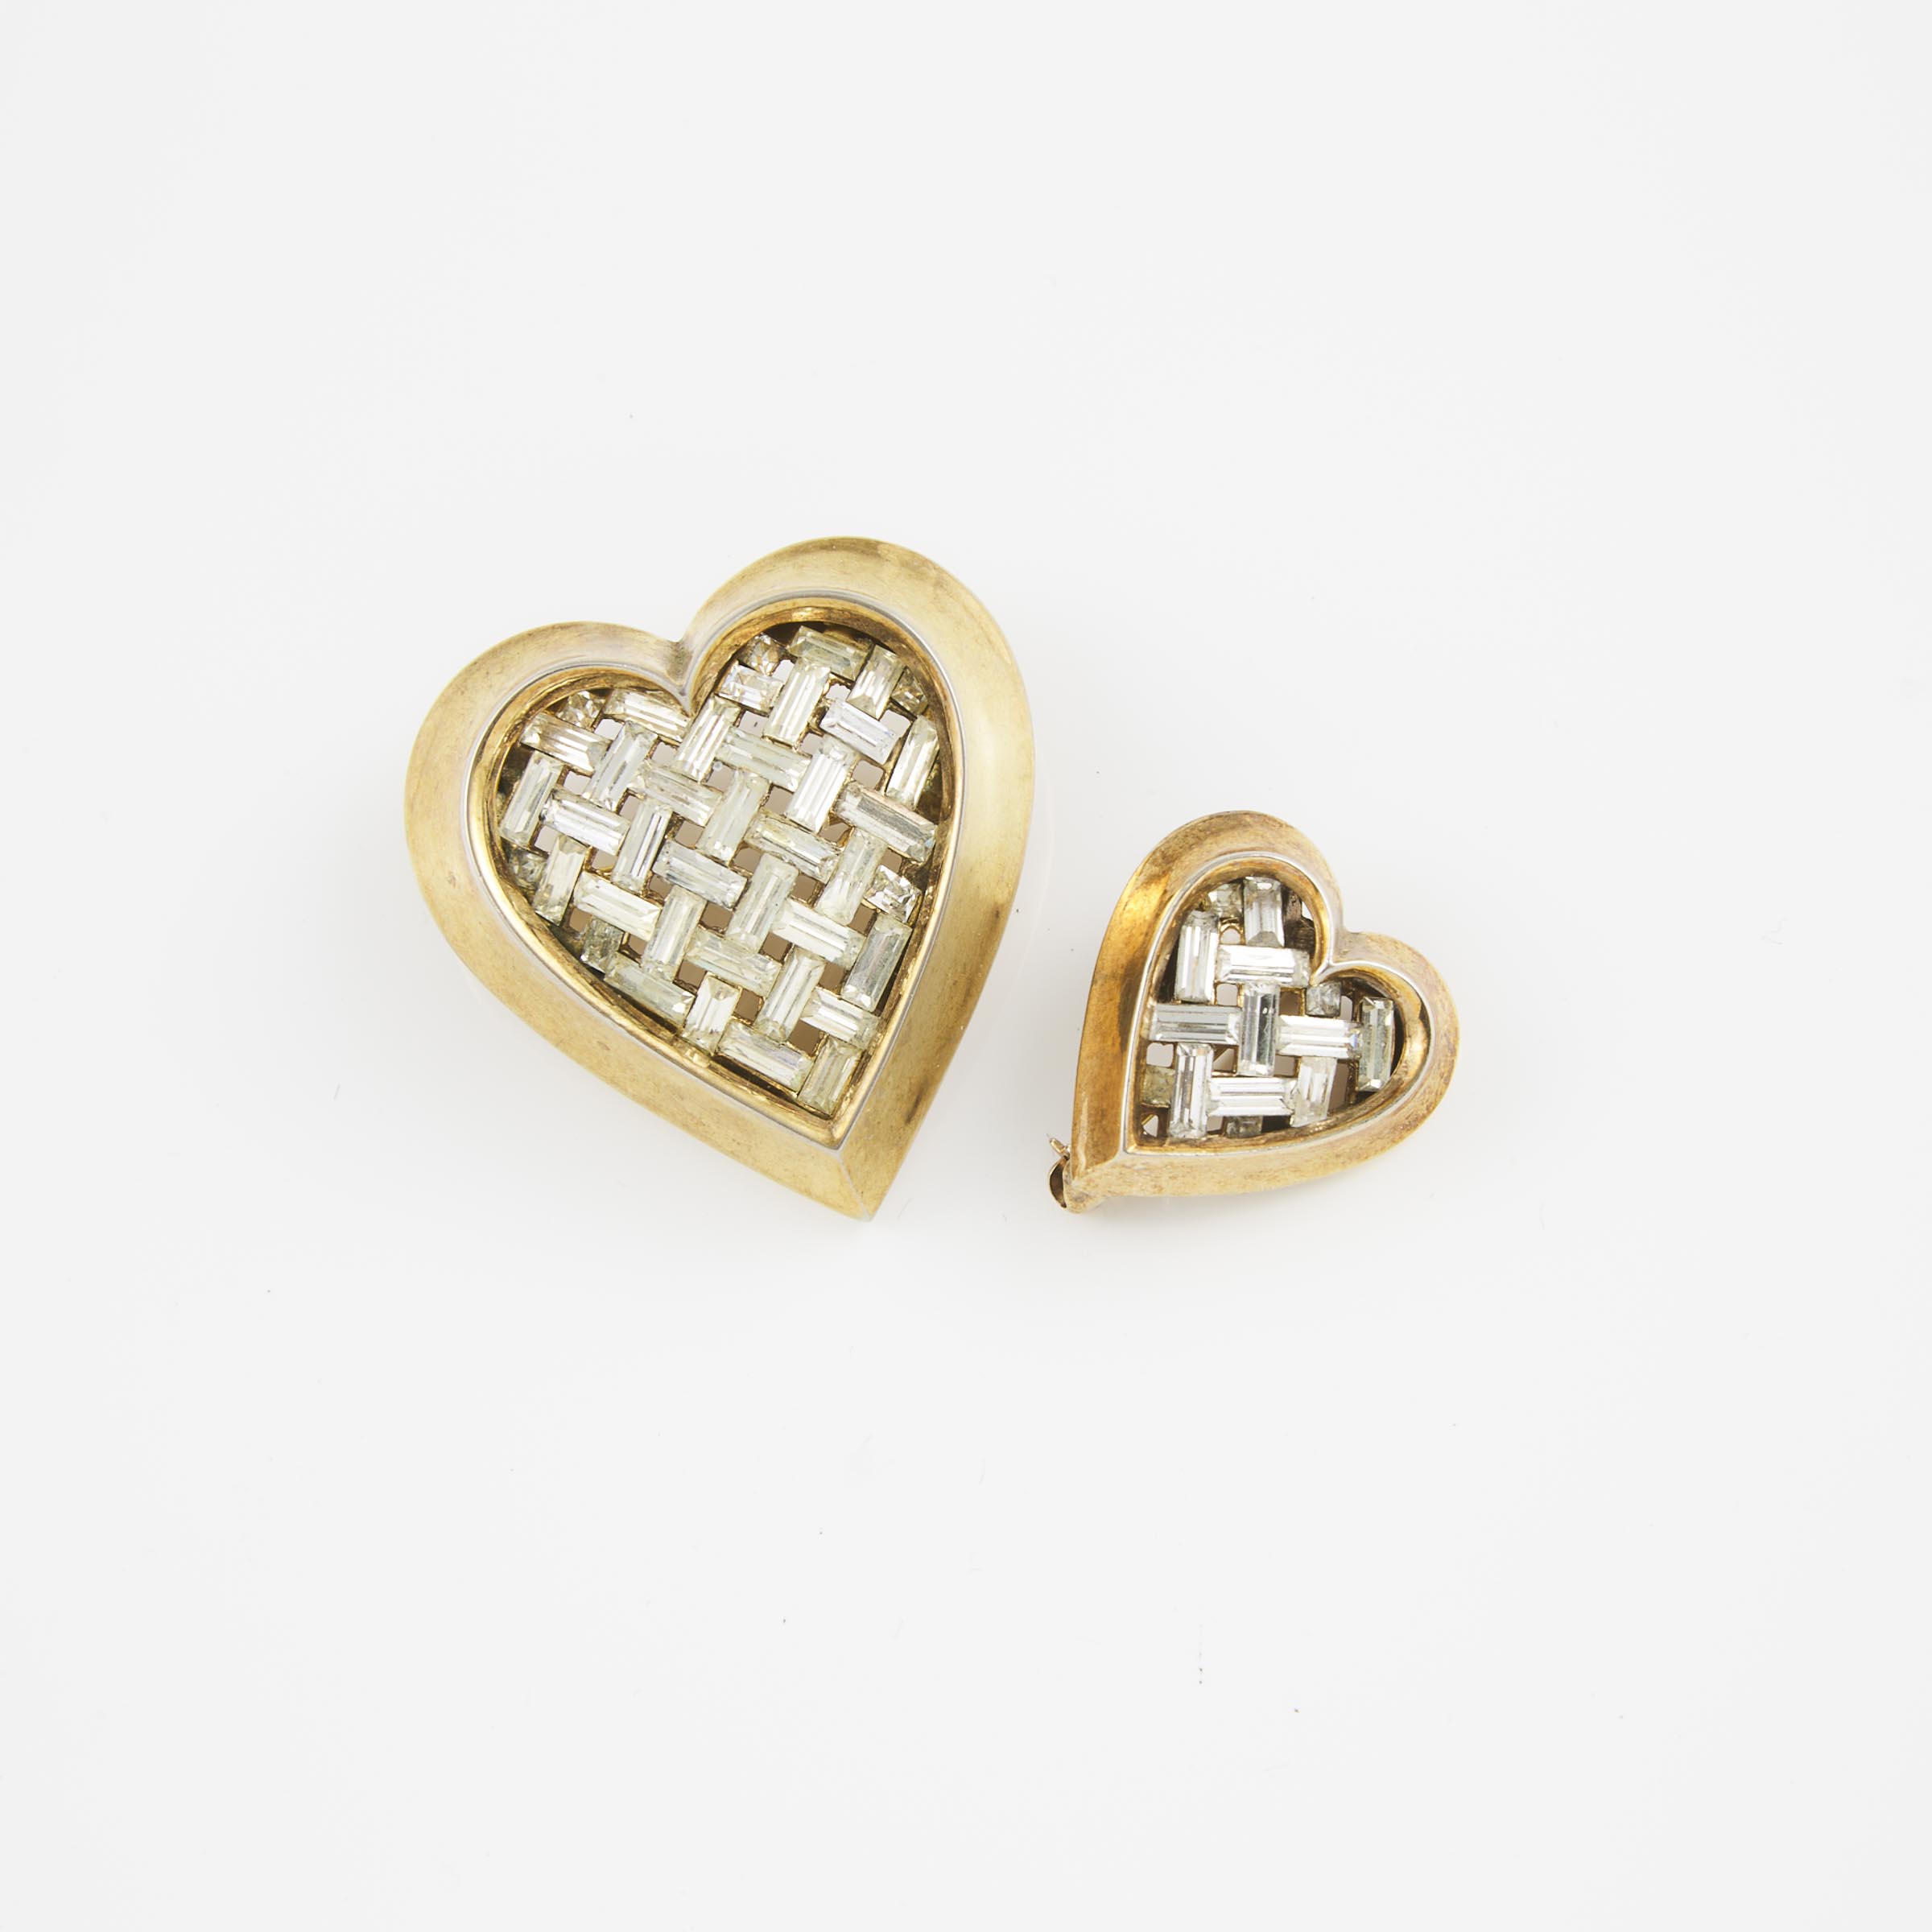 2 Trifari Gold-Tone Metal Heart-Shaped Pins